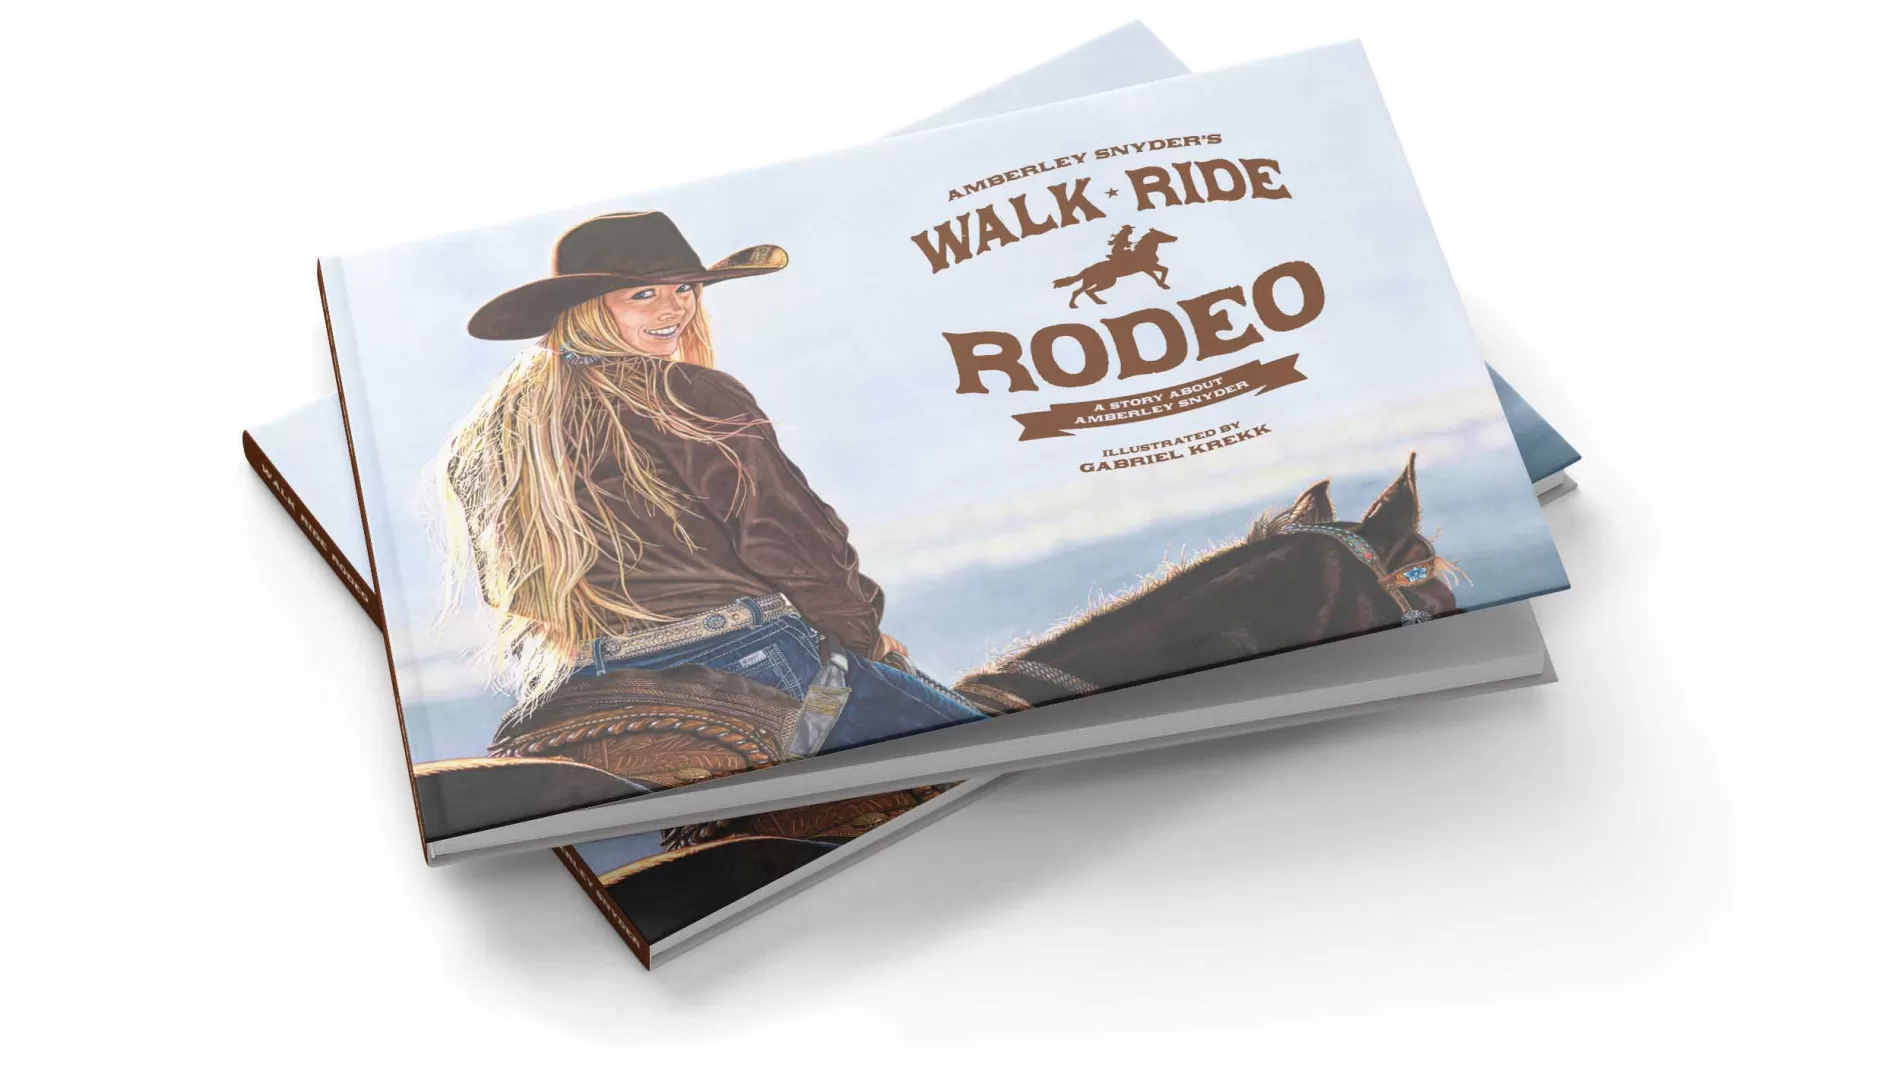 Walk Ride Rodeo Book